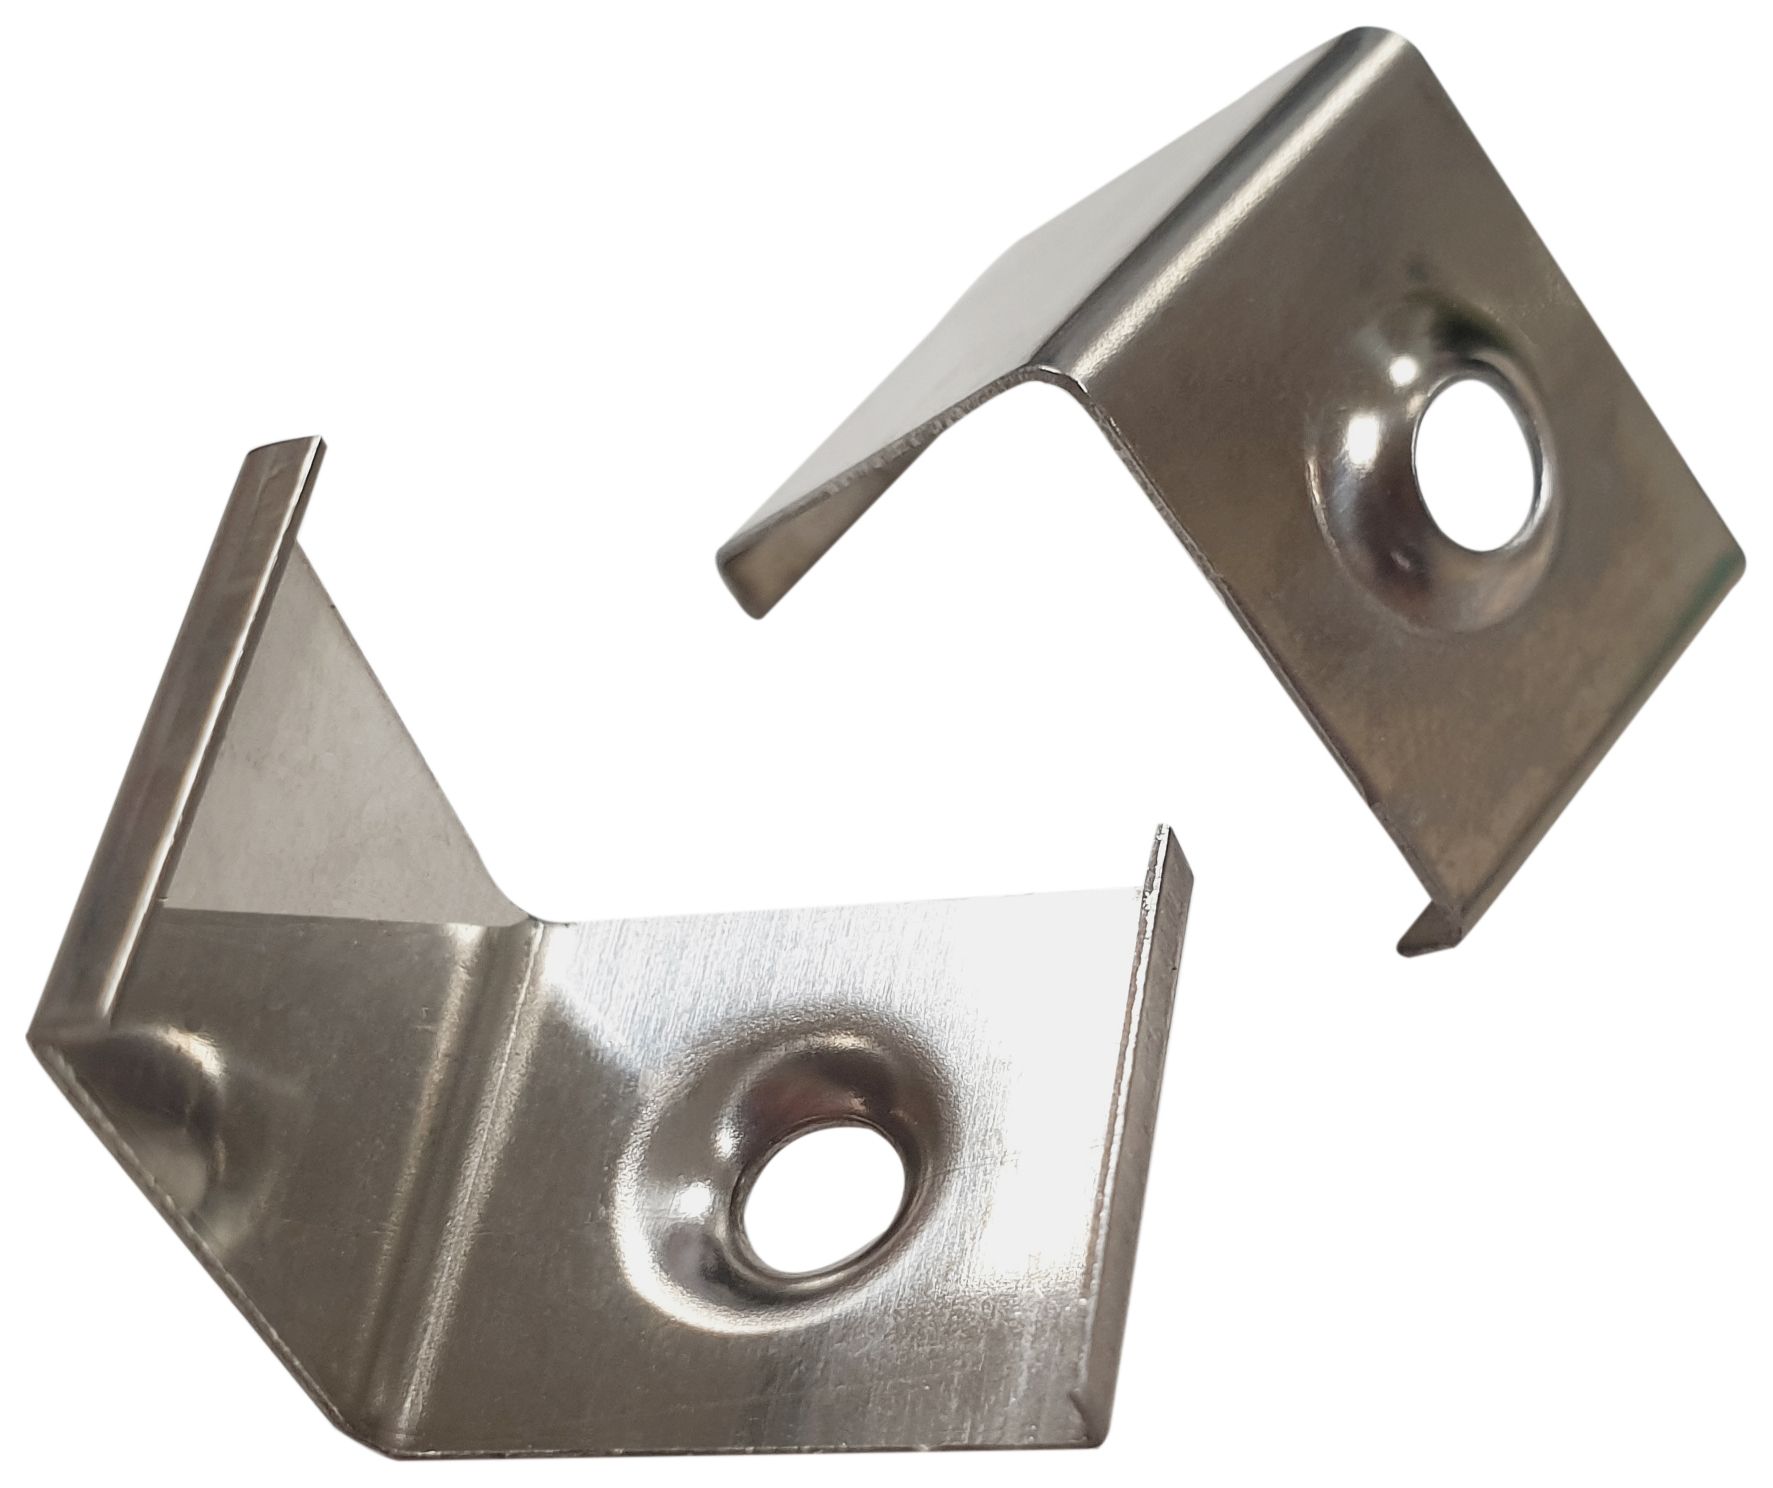 Sensio Albury Mounting Brackets for Angled Profile Lighting (2 brackets)